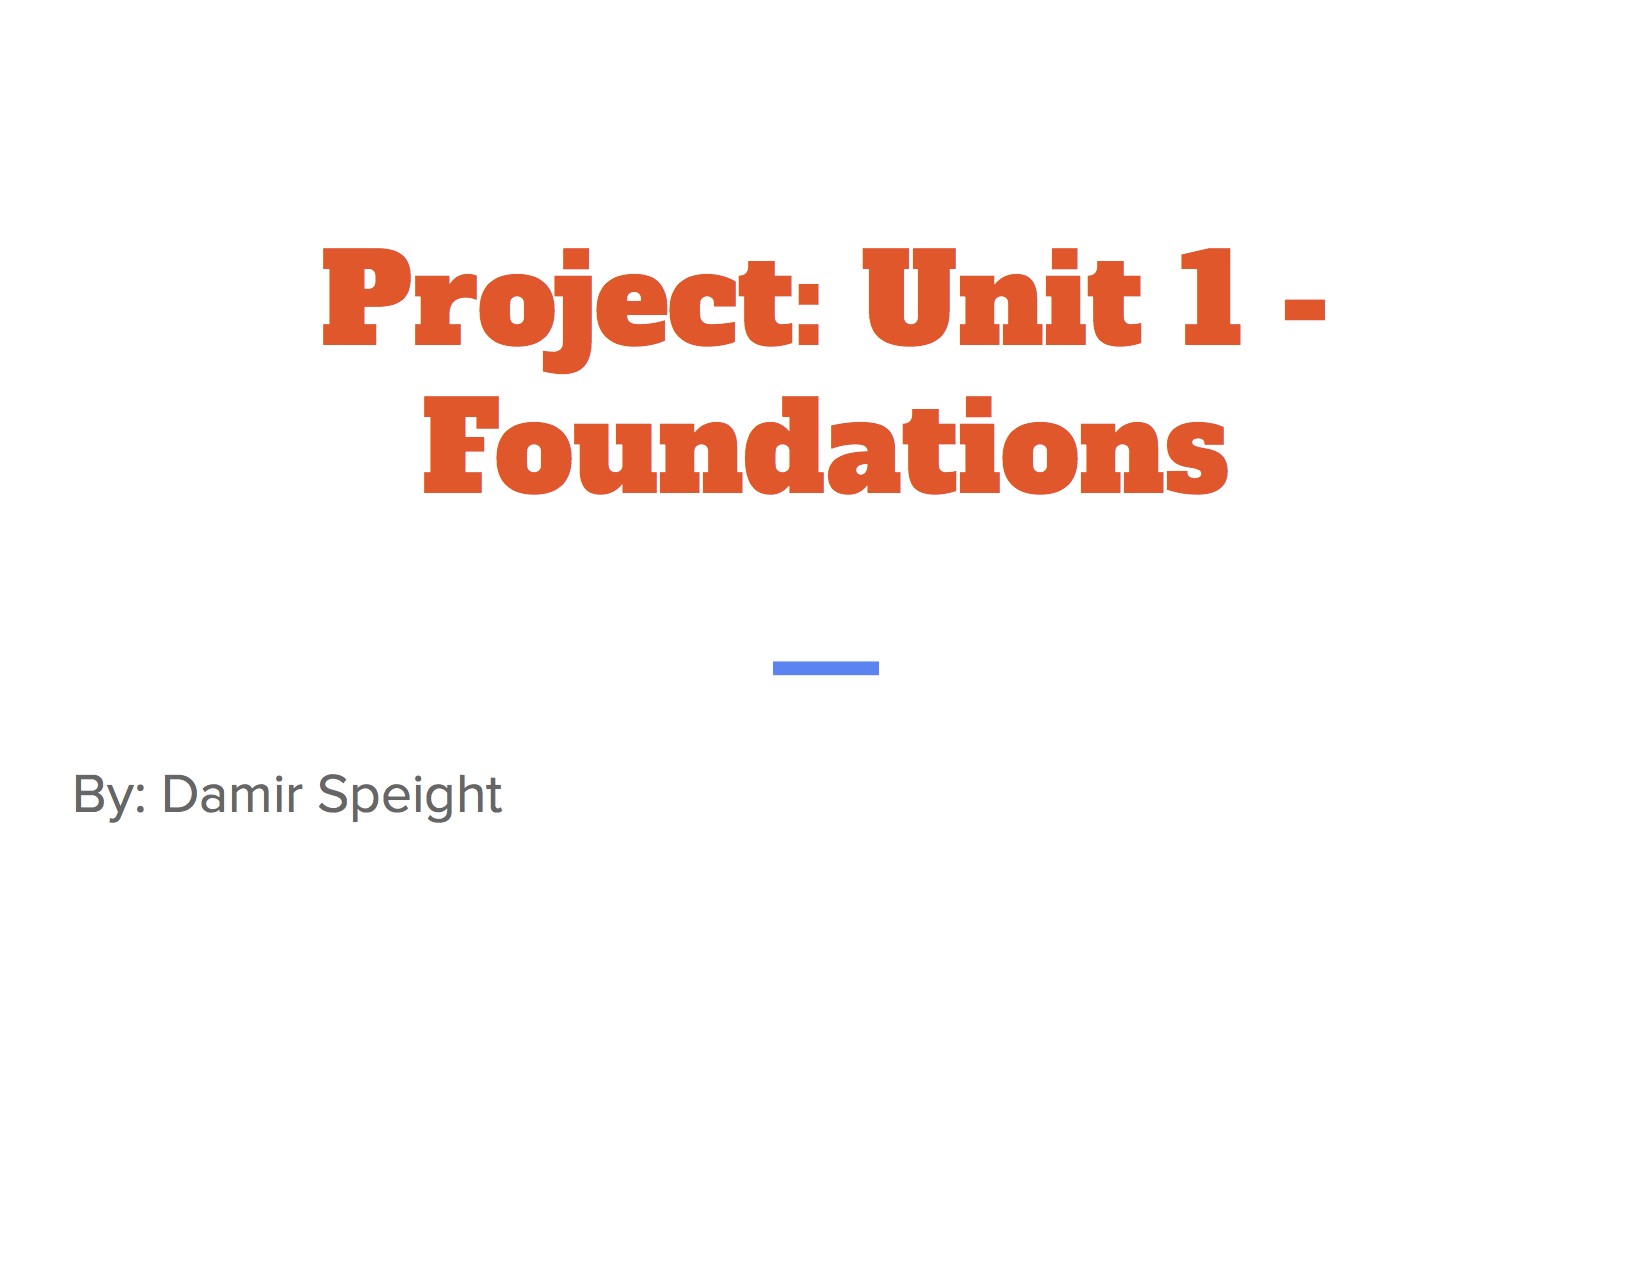 Project_ Unit 1 - Foundations